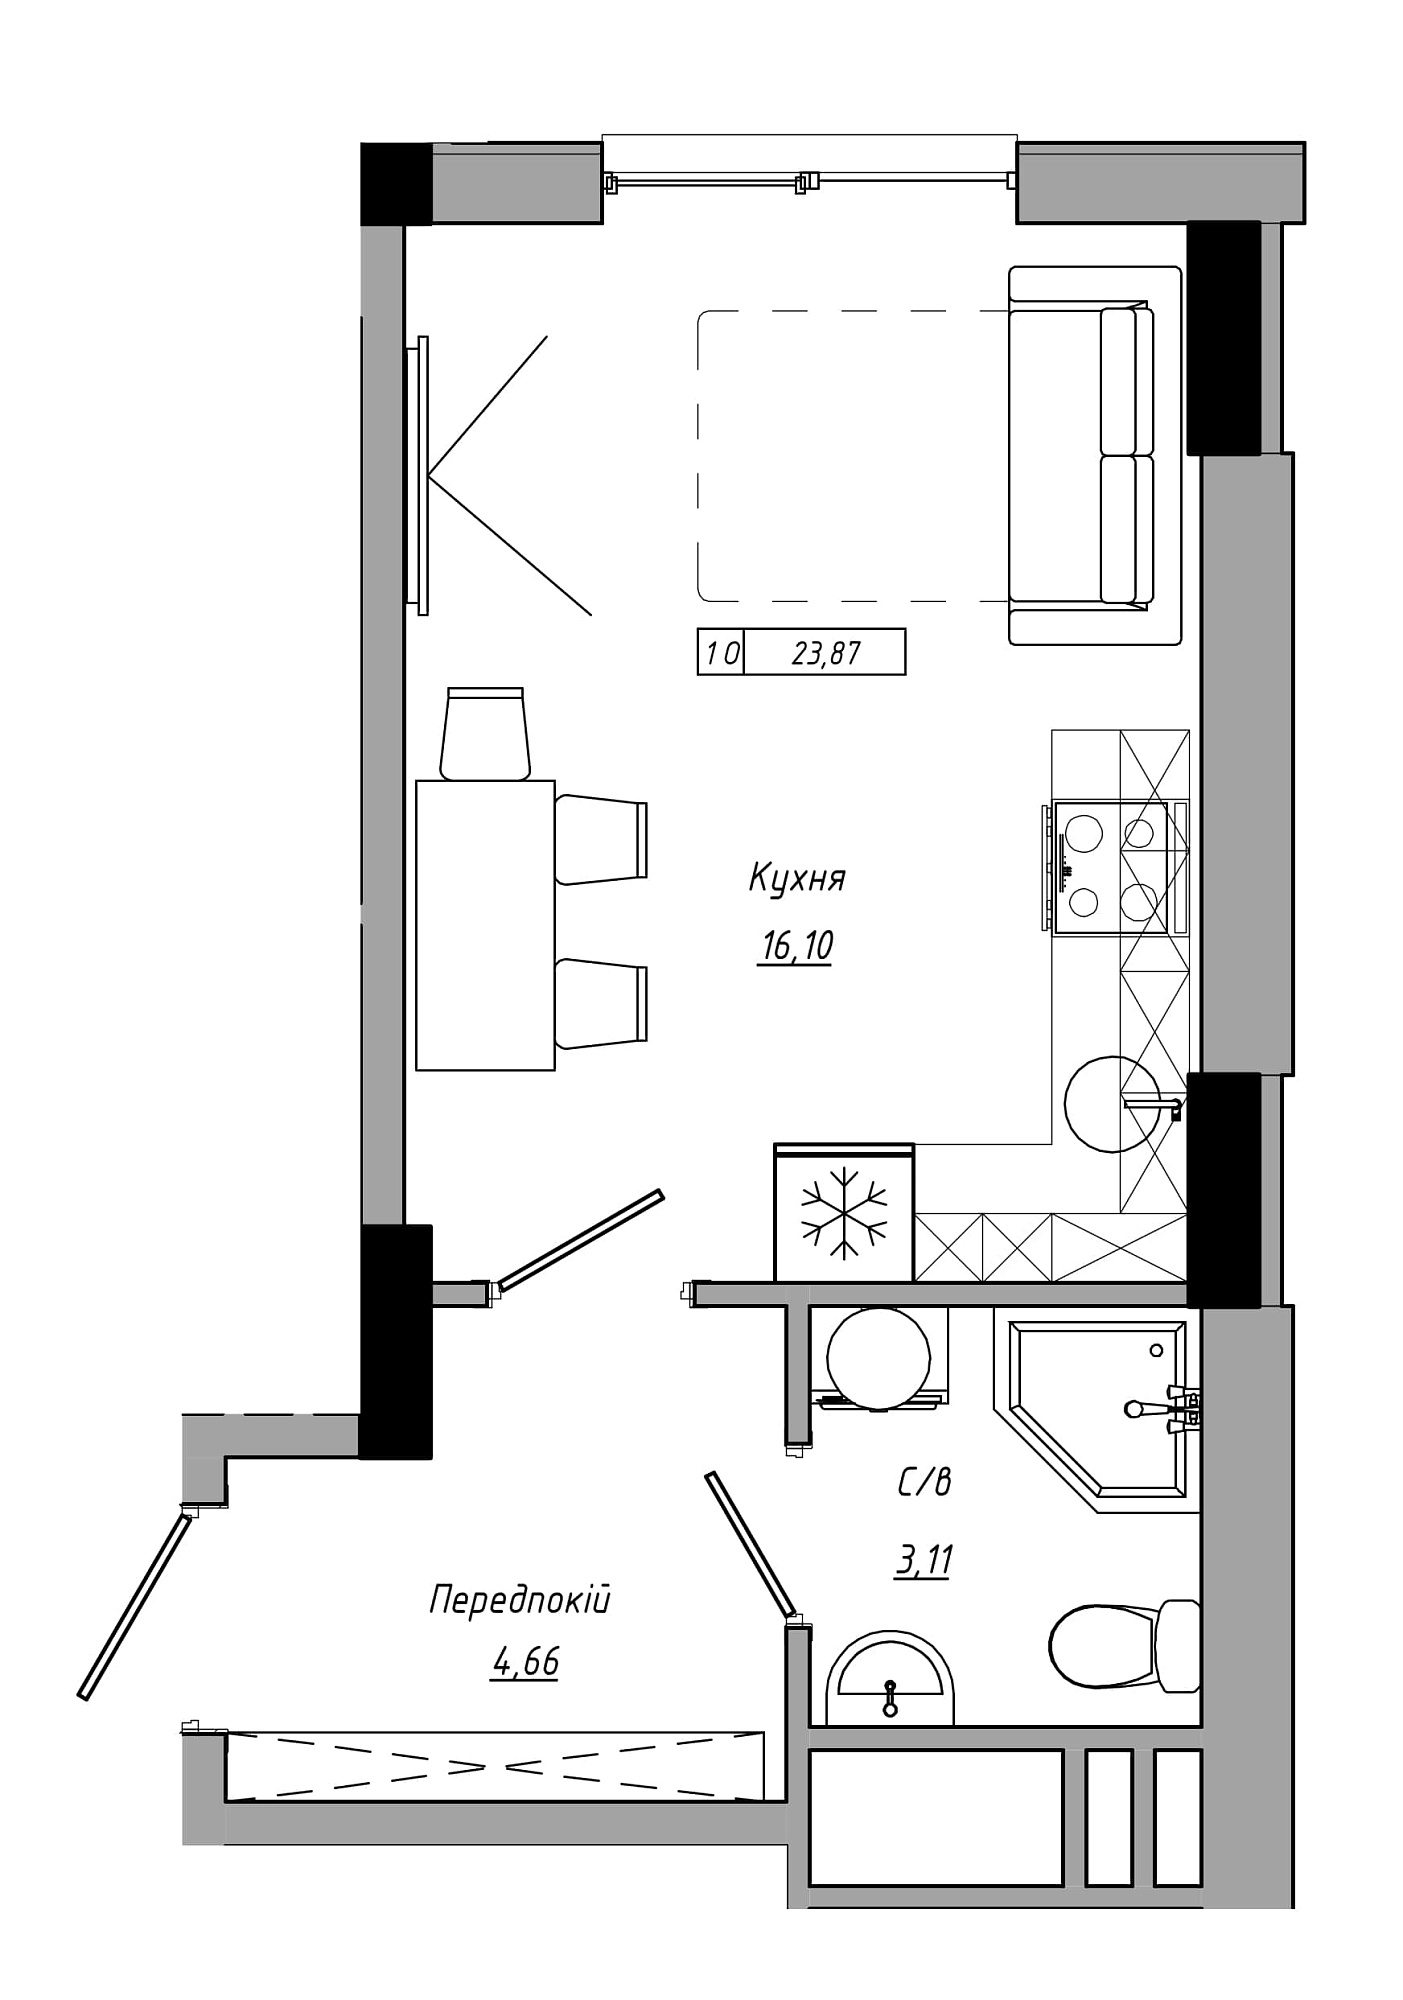 Planning Smart flats area 23.87m2, AB-21-05/00017.